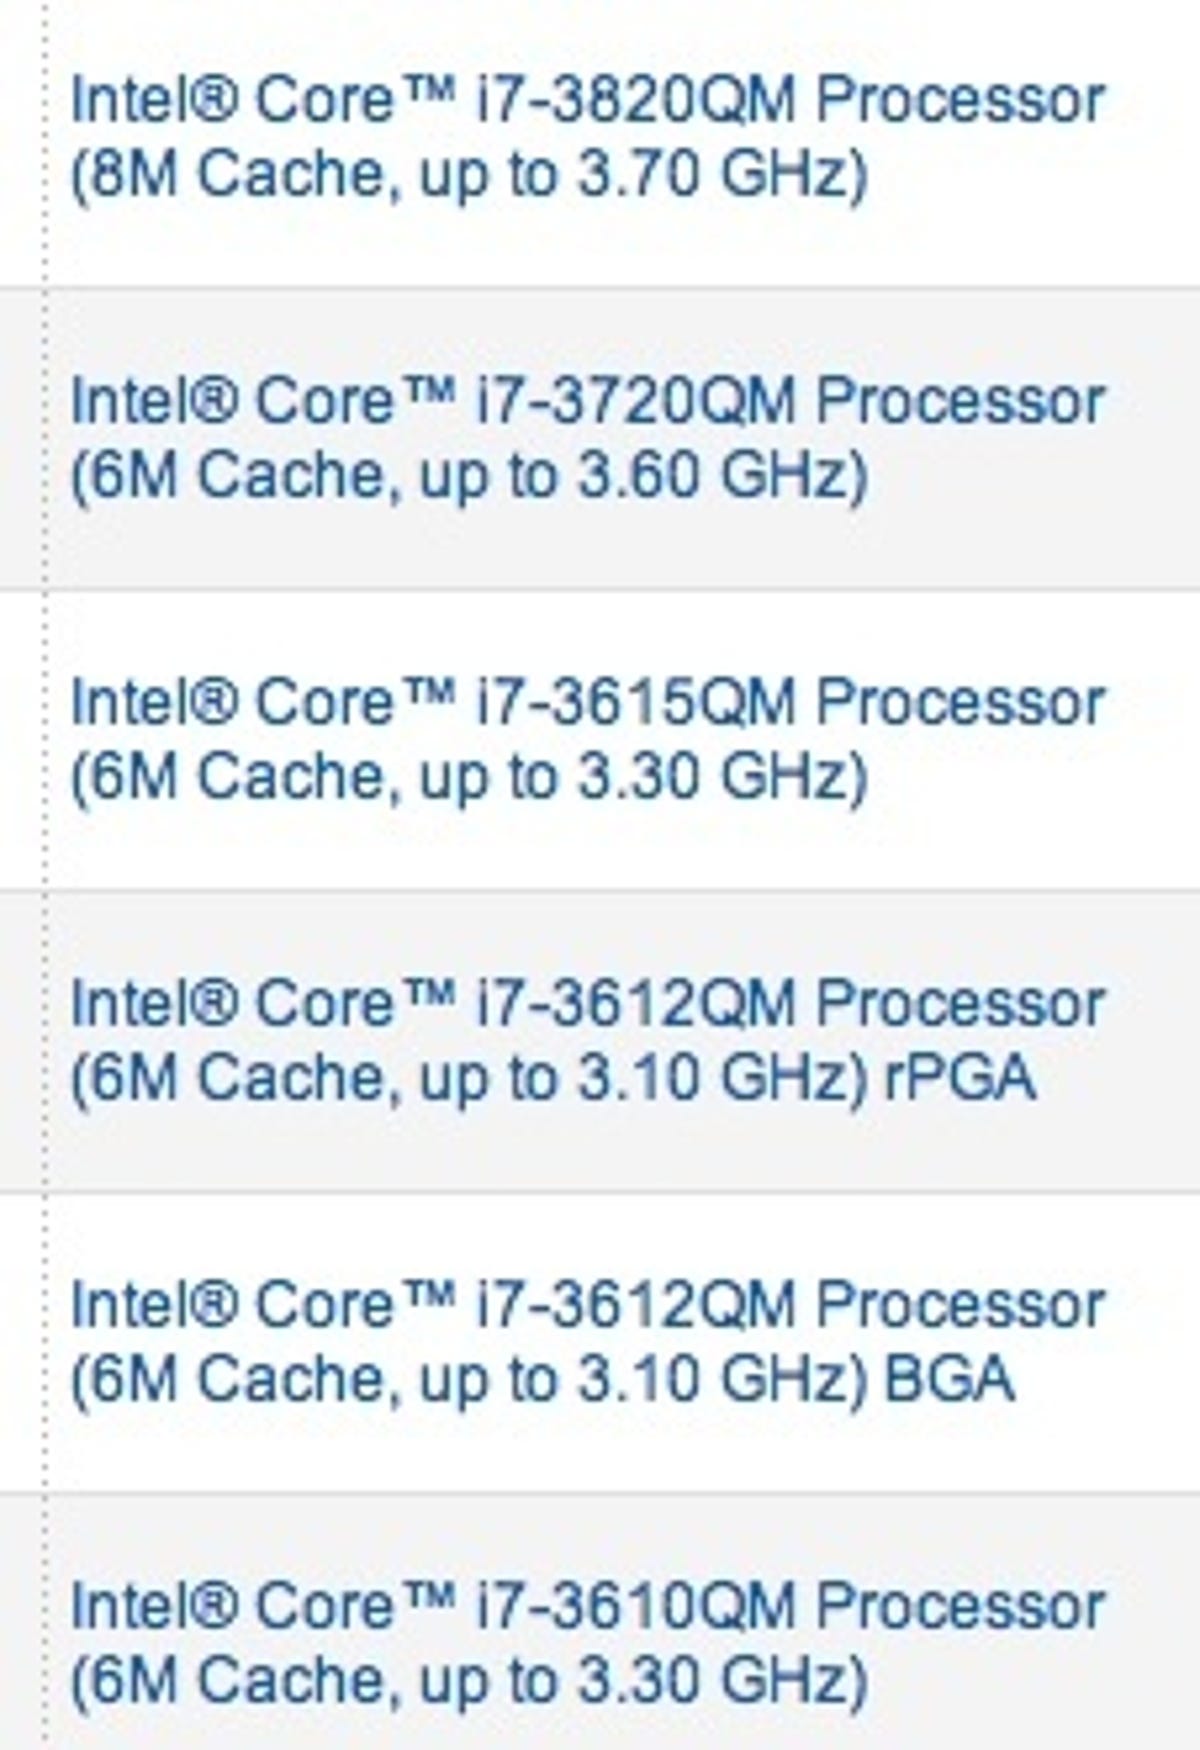 Intel list of Ivy Bridge quad-core silicon now shipping.